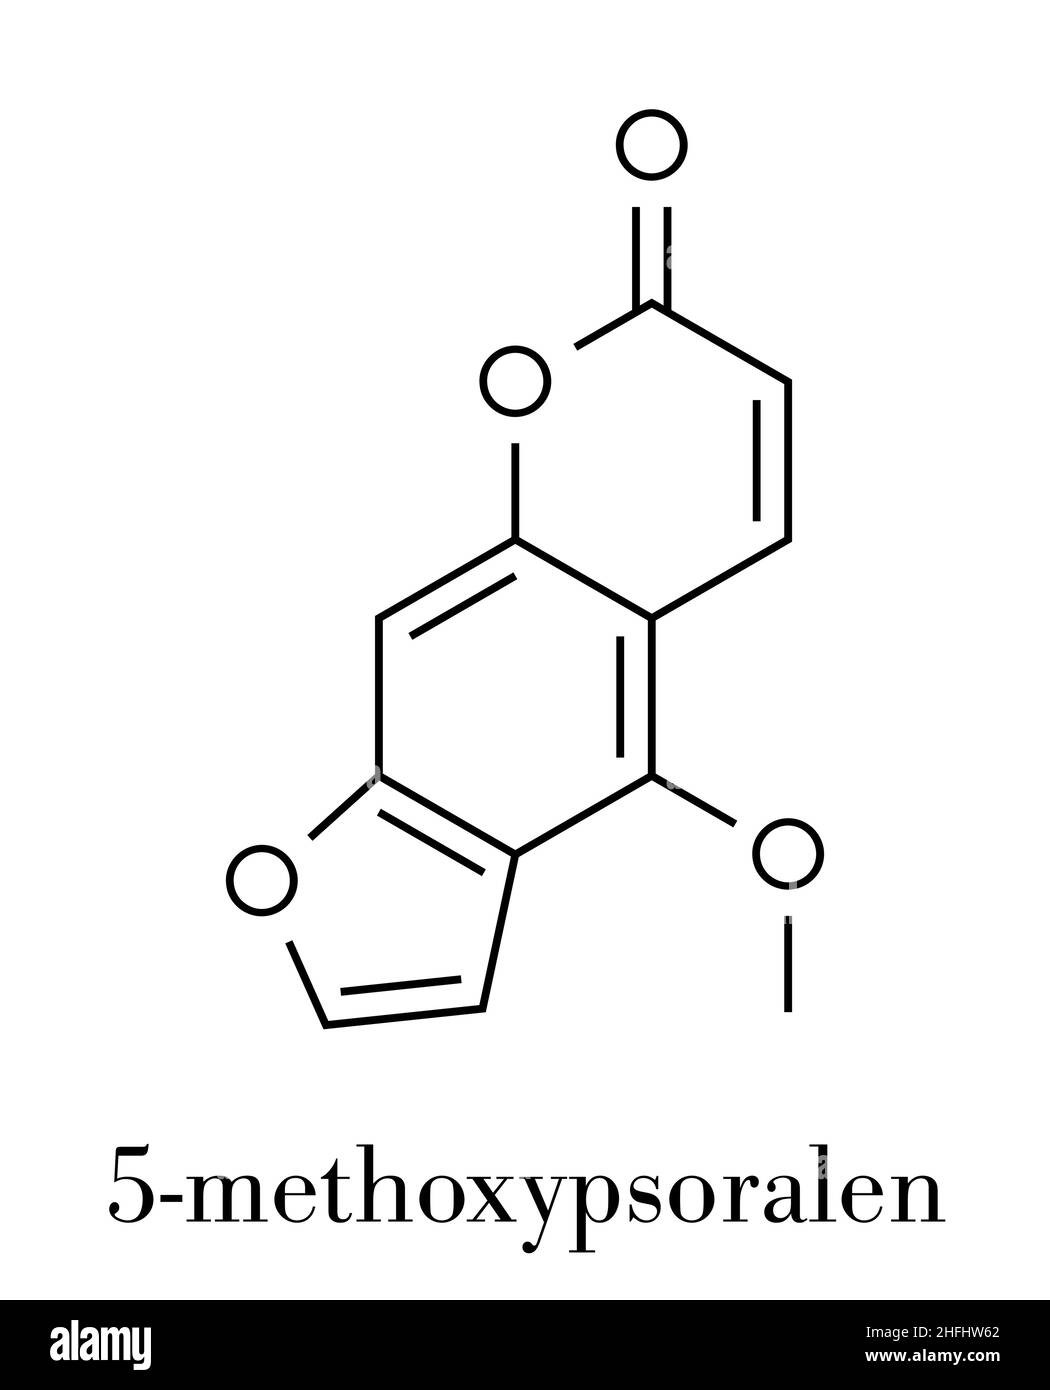 Bergapten or 5-methoxypsoralen molecule. Photosensitizer present in several plants, responsible for causing phytophotodermatitis. Skeletal formula. Stock Vector